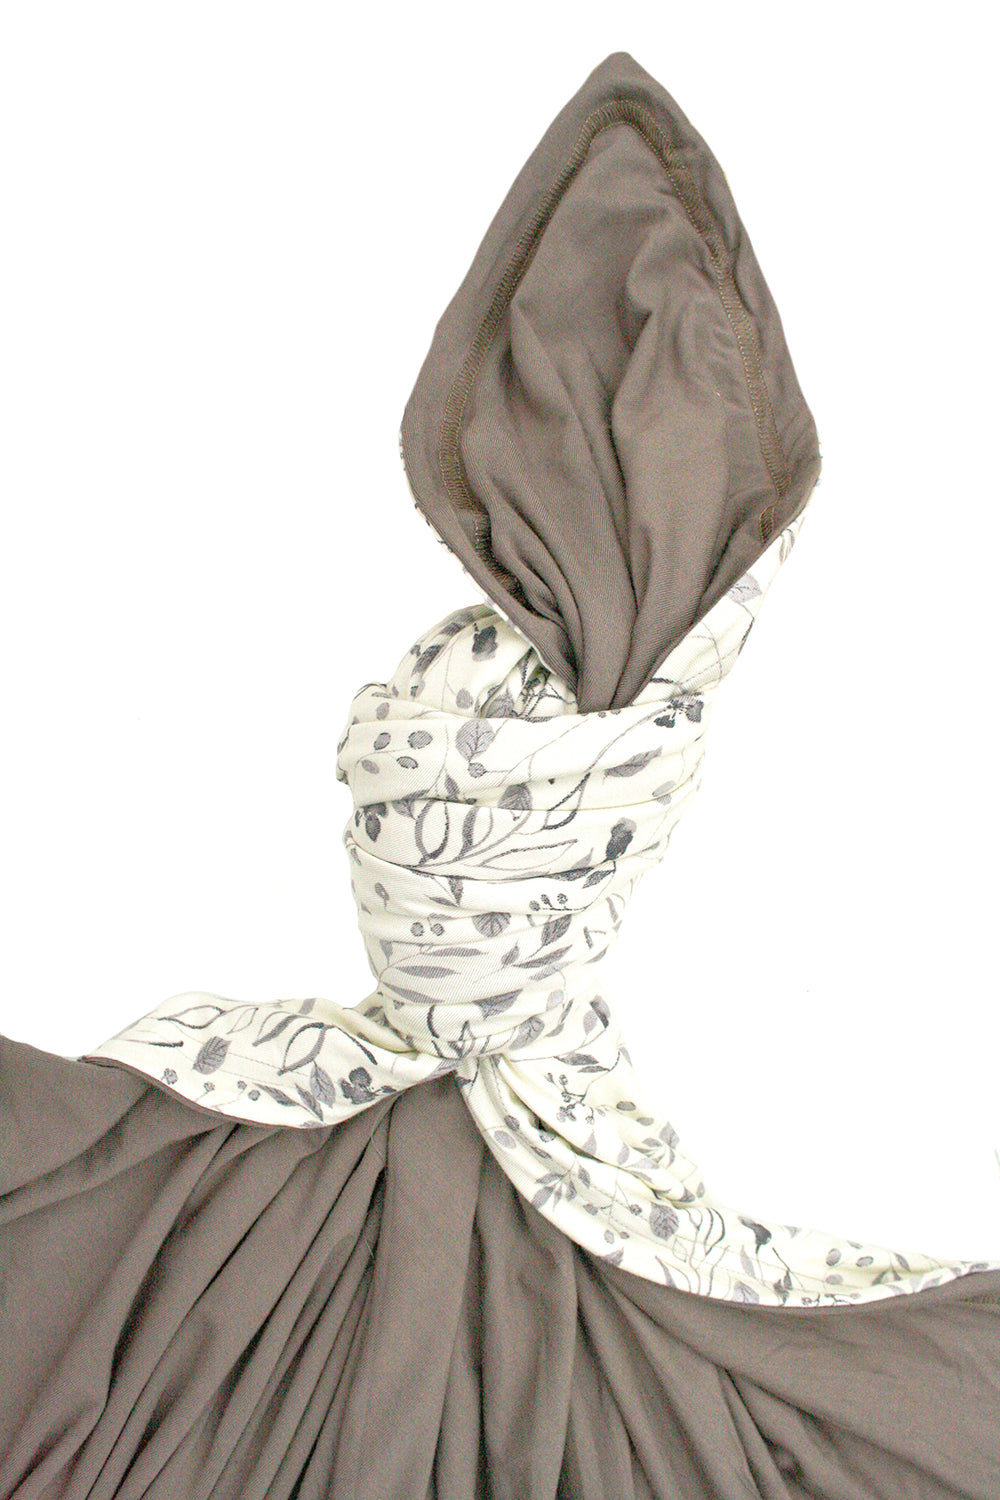 Double Sided Universal Swaddle Blanket - One Kind Clothing, LLC